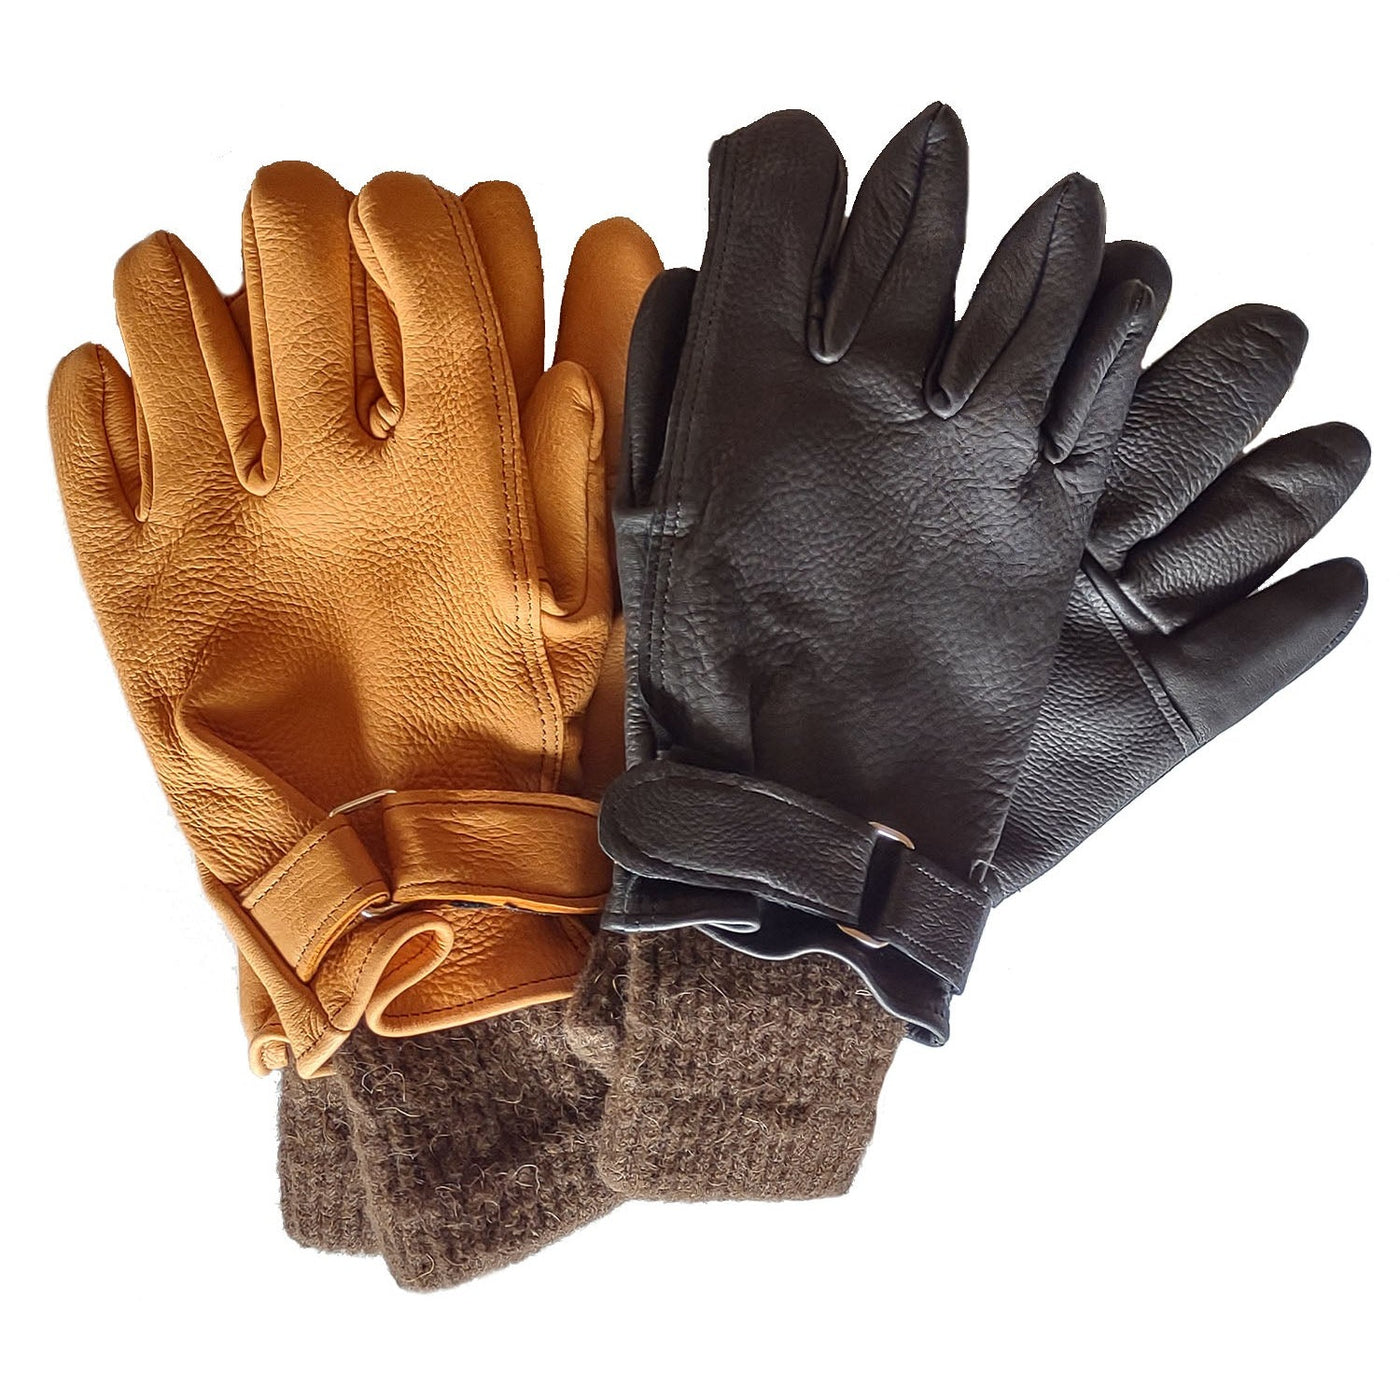 Combo glove set; Bison liner glove with deerskin over glove